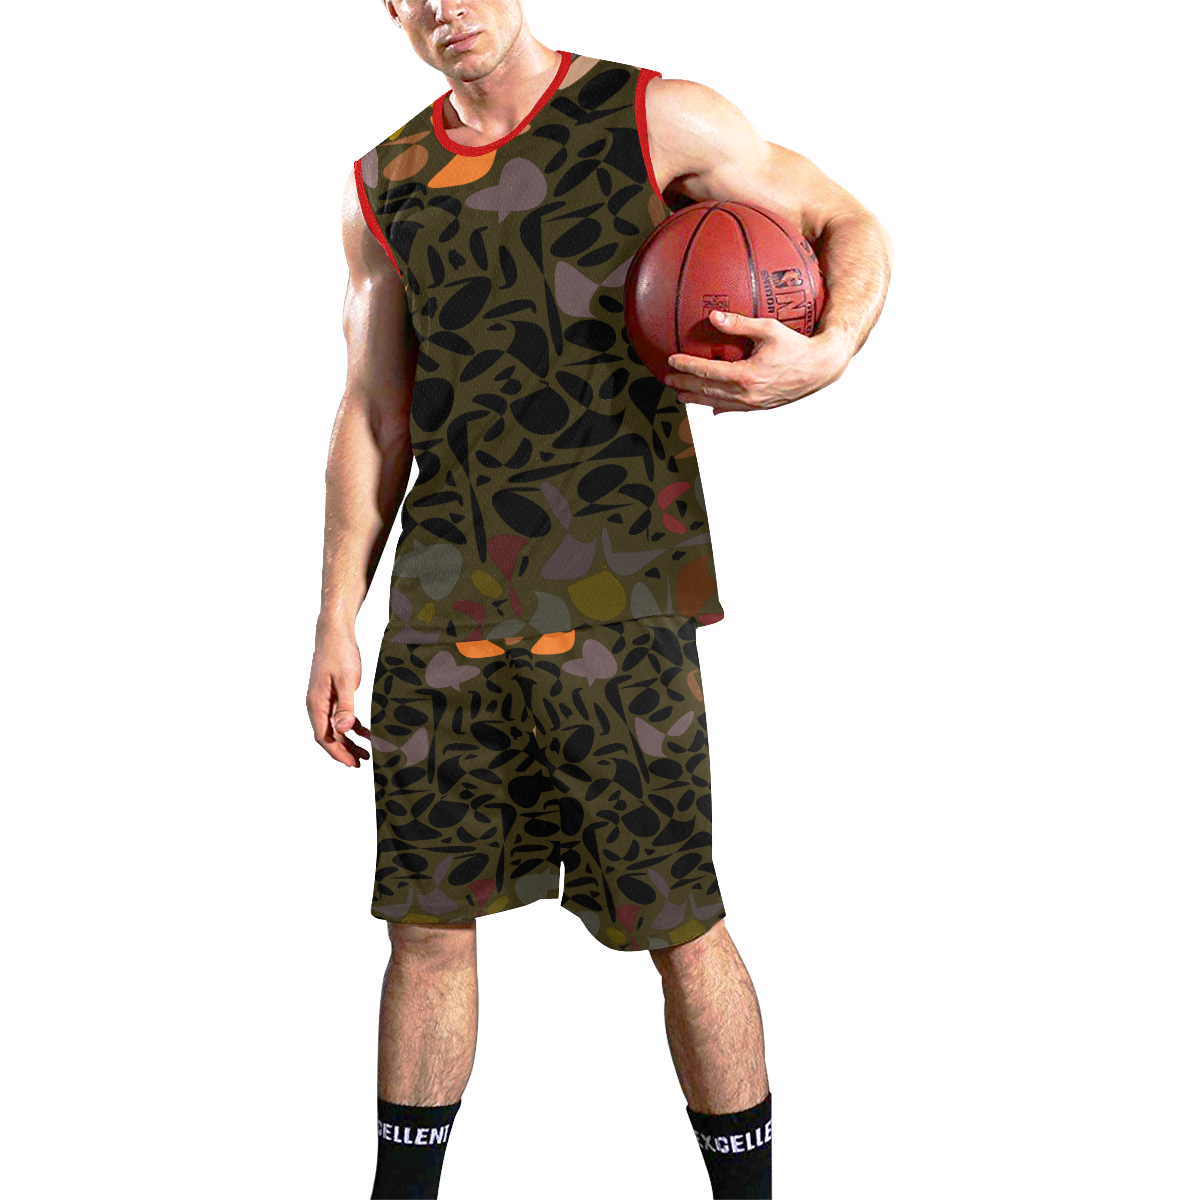 zappwaits Z9 All Over Print Basketball Uniform